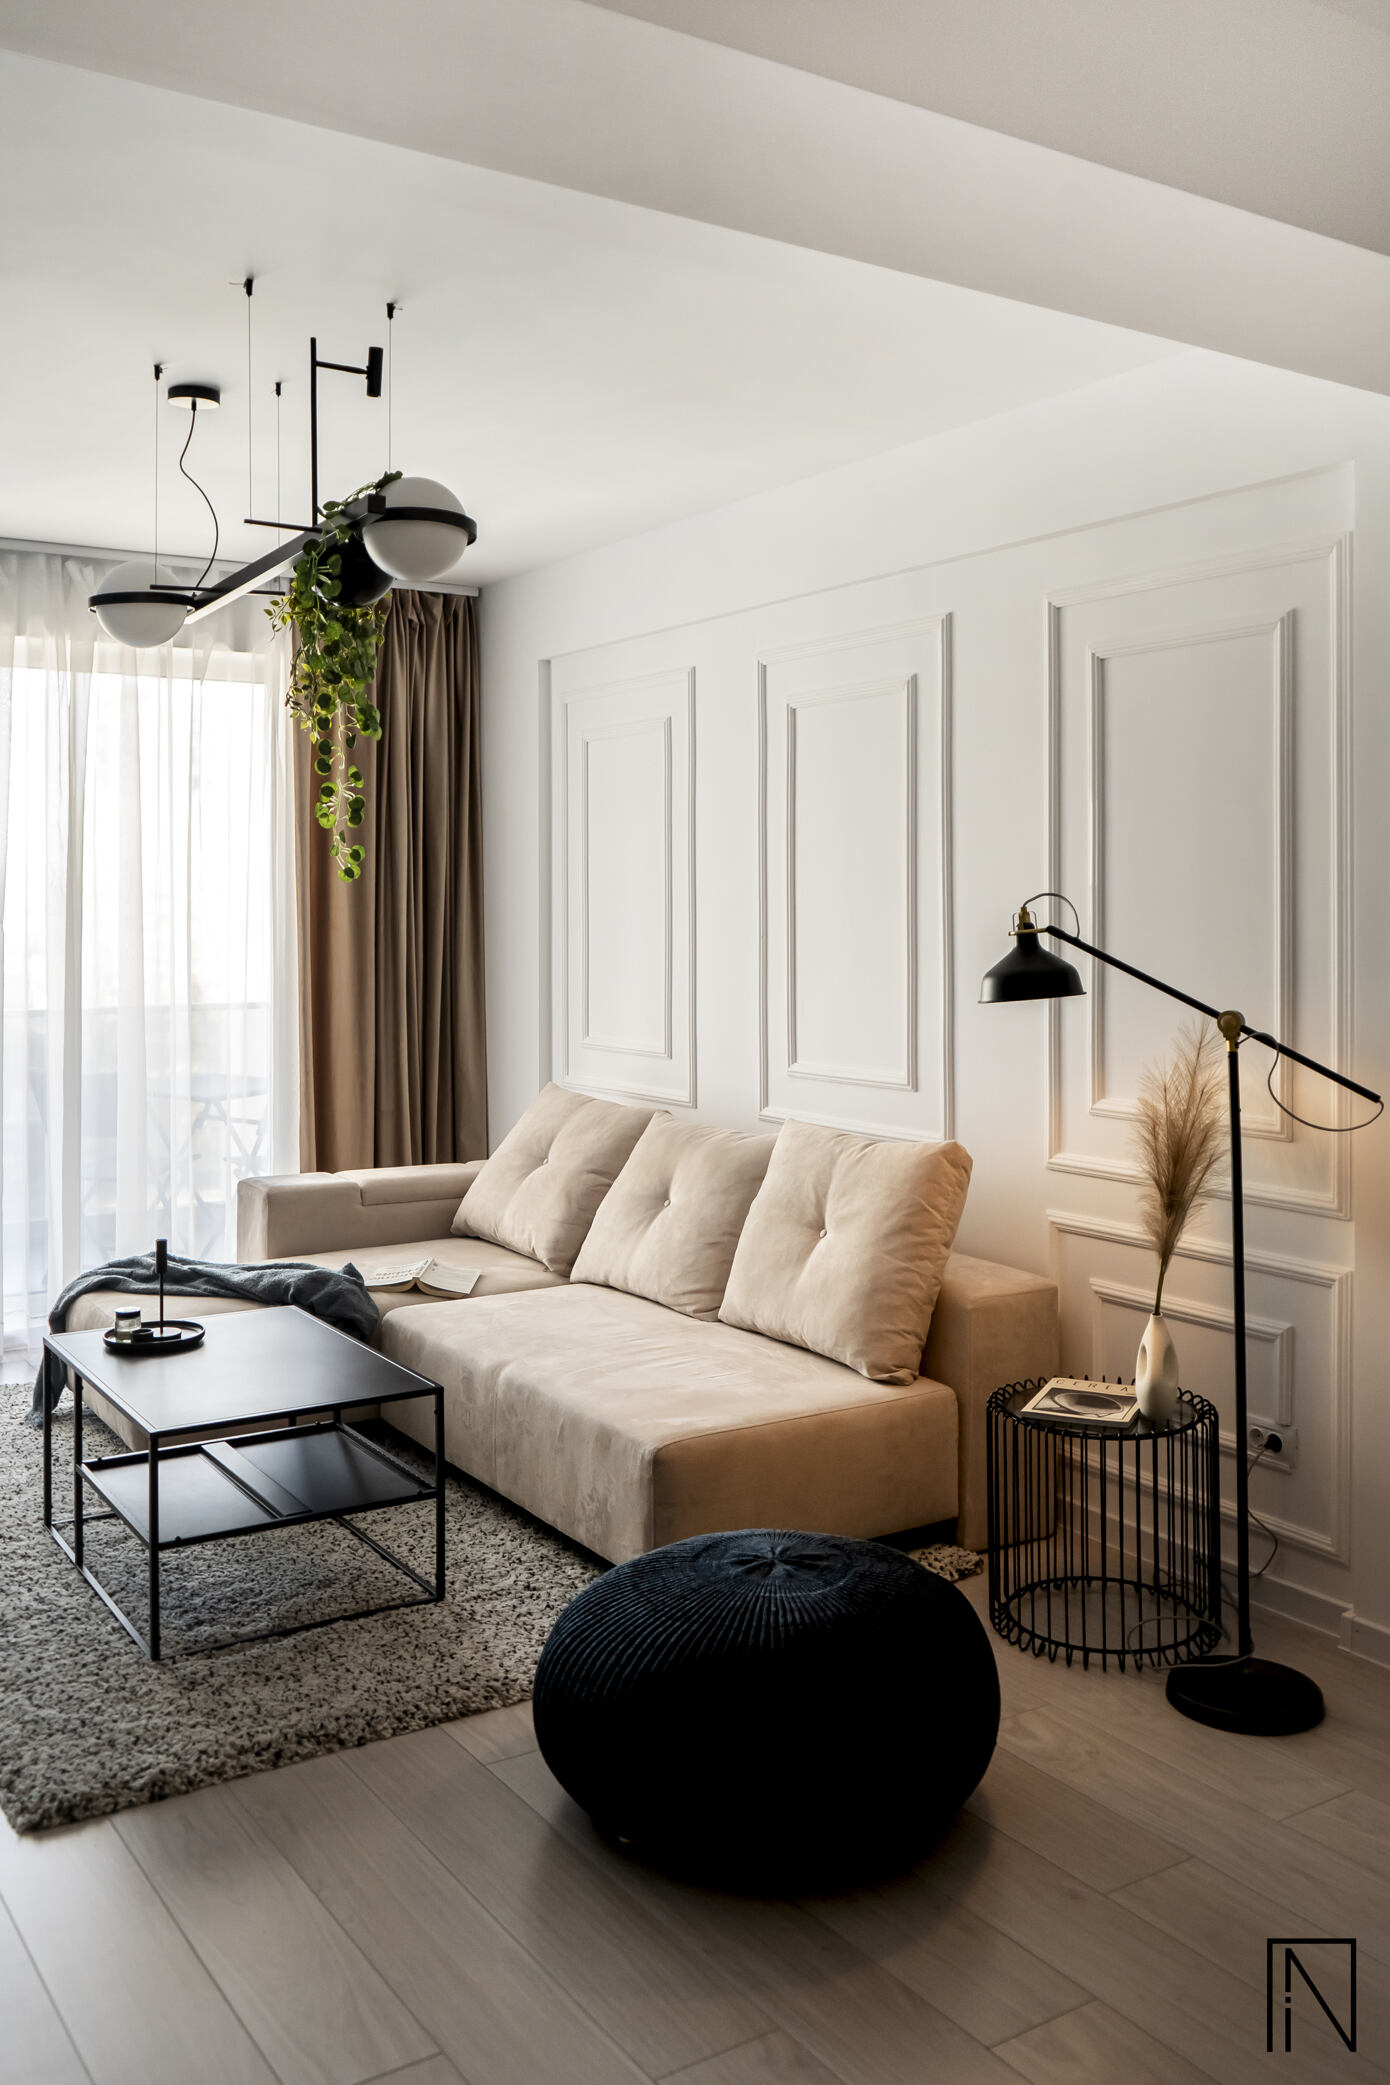 Azurblau Aesthetic: Chic One-Bedroom Living Redefined